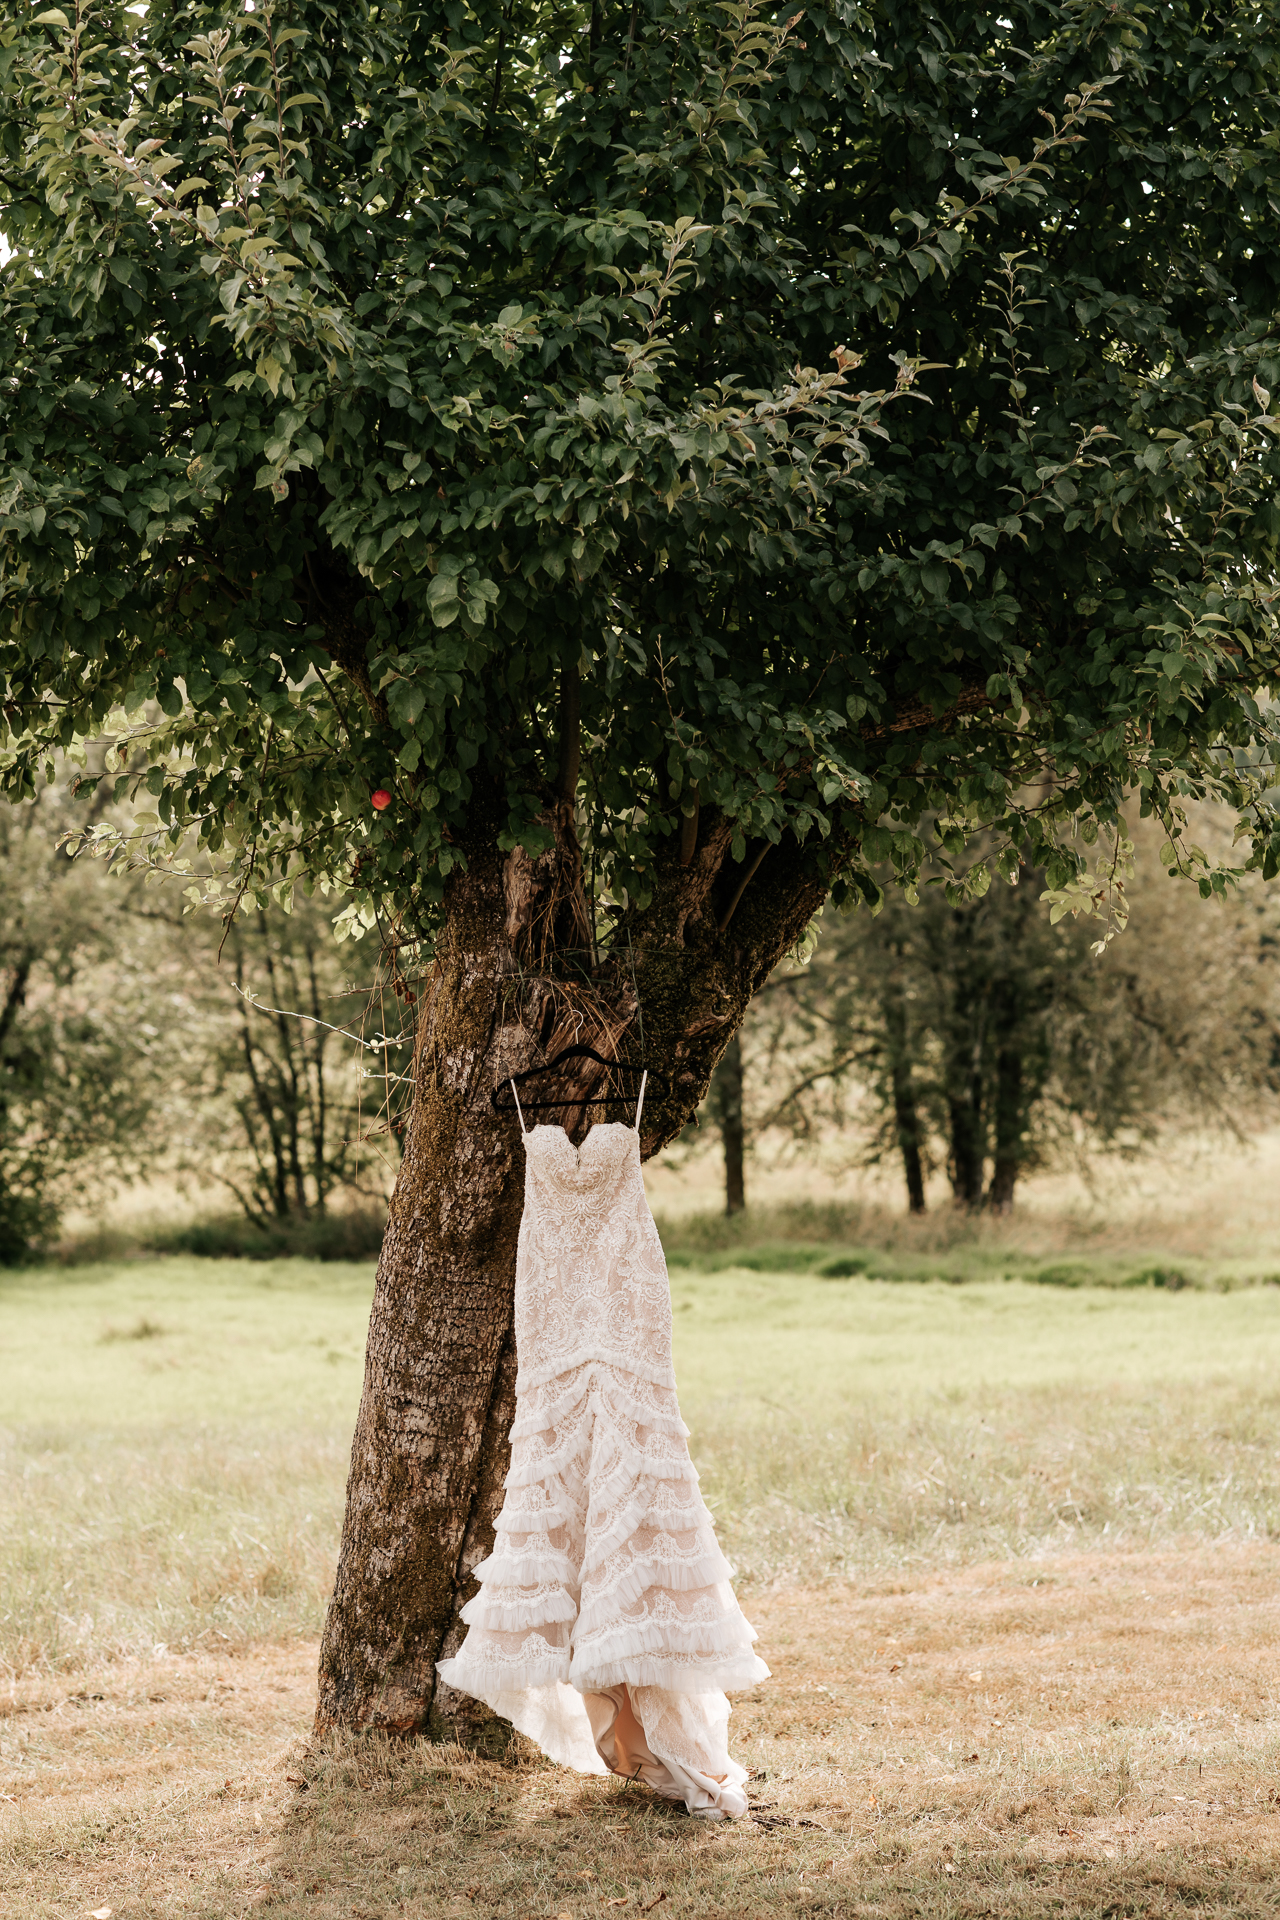 Boho wedding dress hanging from an apple tree